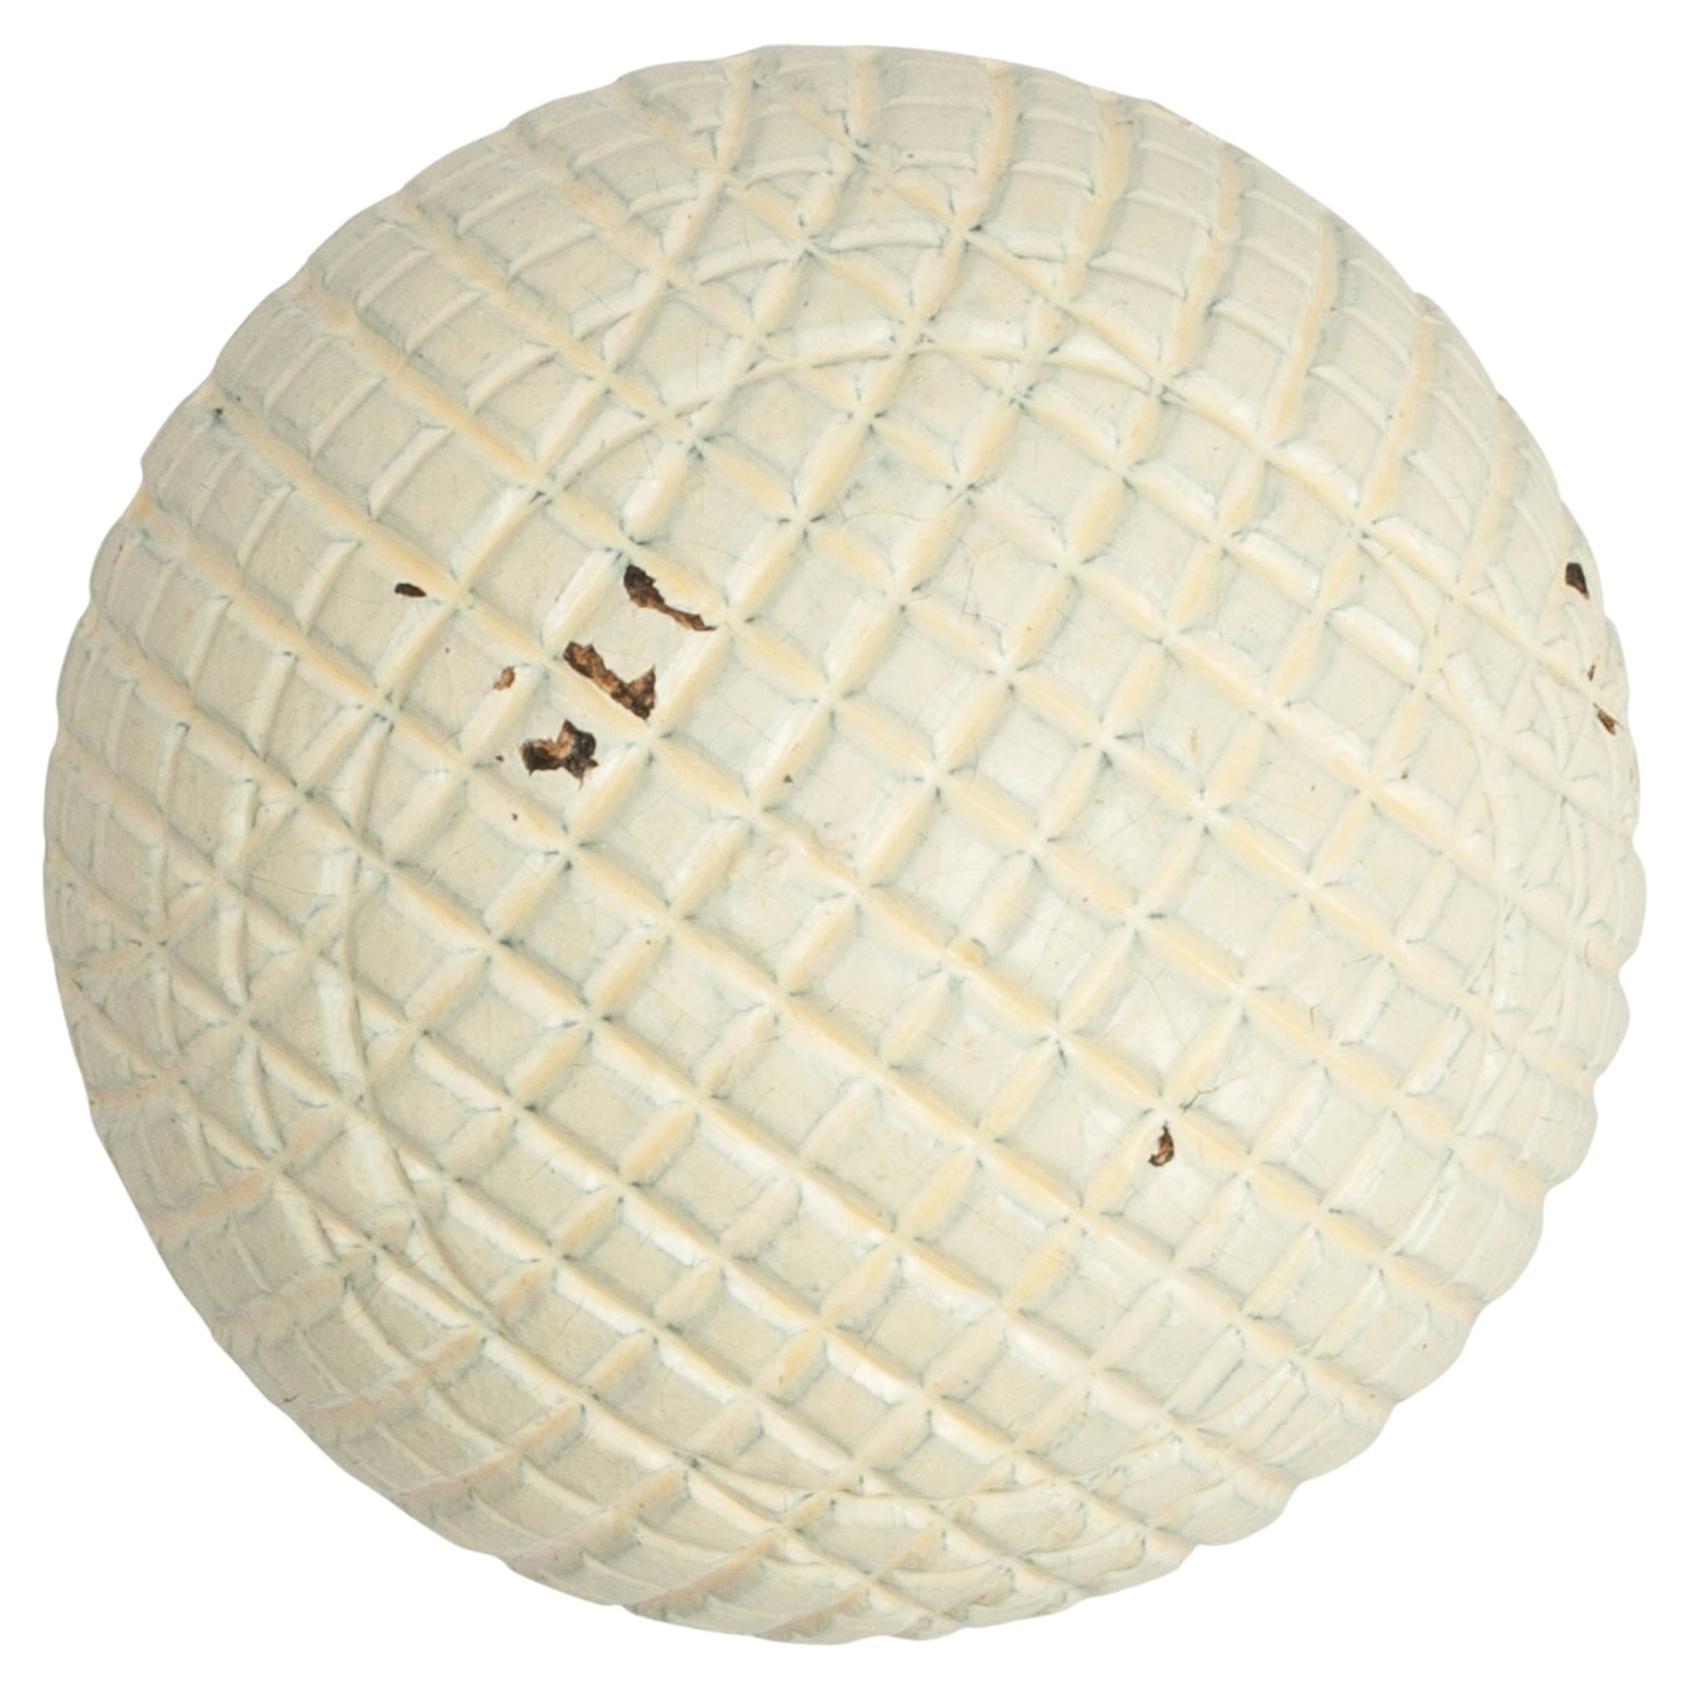 Antique, Unused Golf Ball, Gutta Percha, Mesh Pattern